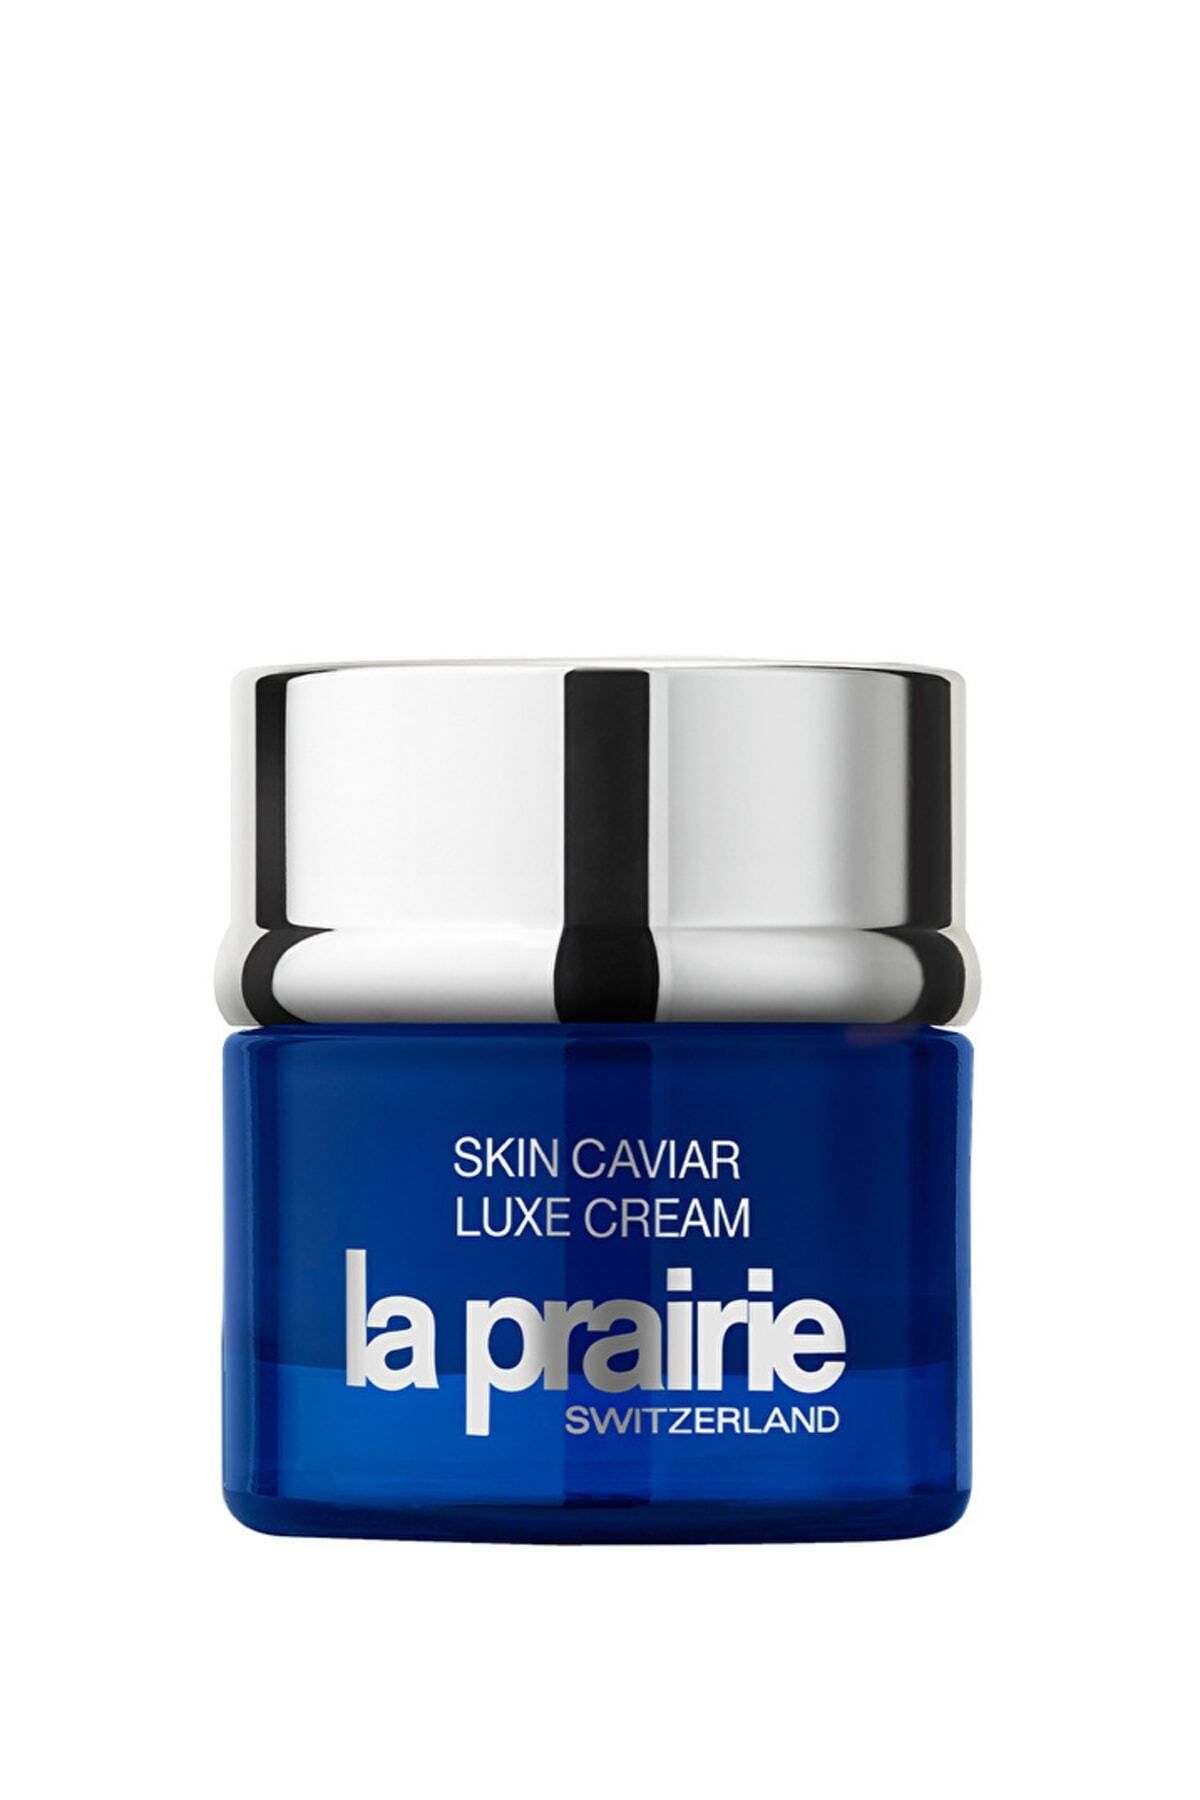 La Prairie Skin Caviar Luxe Cream 50ml Facelight179